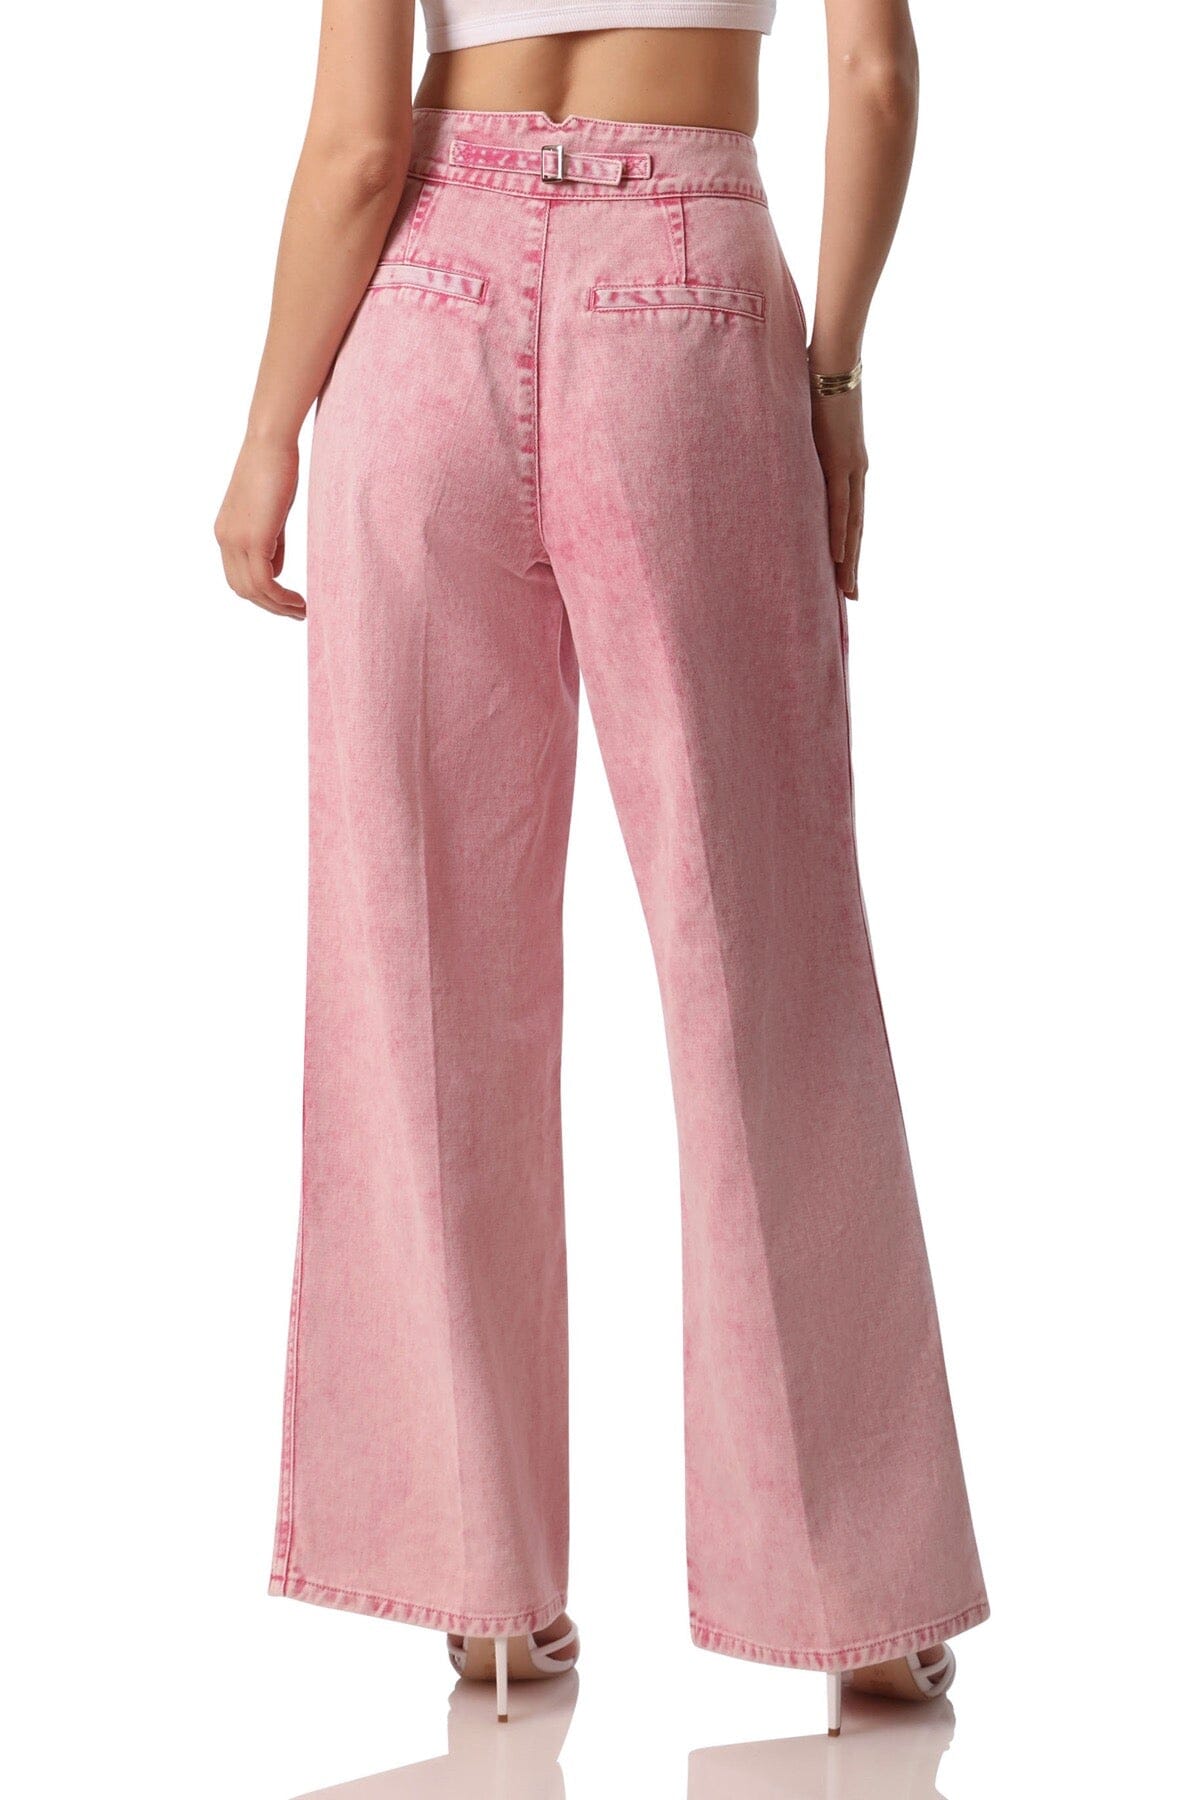 acid wash wide leg high waist denim trouser jeans pink - figure flattering casual work pants for women